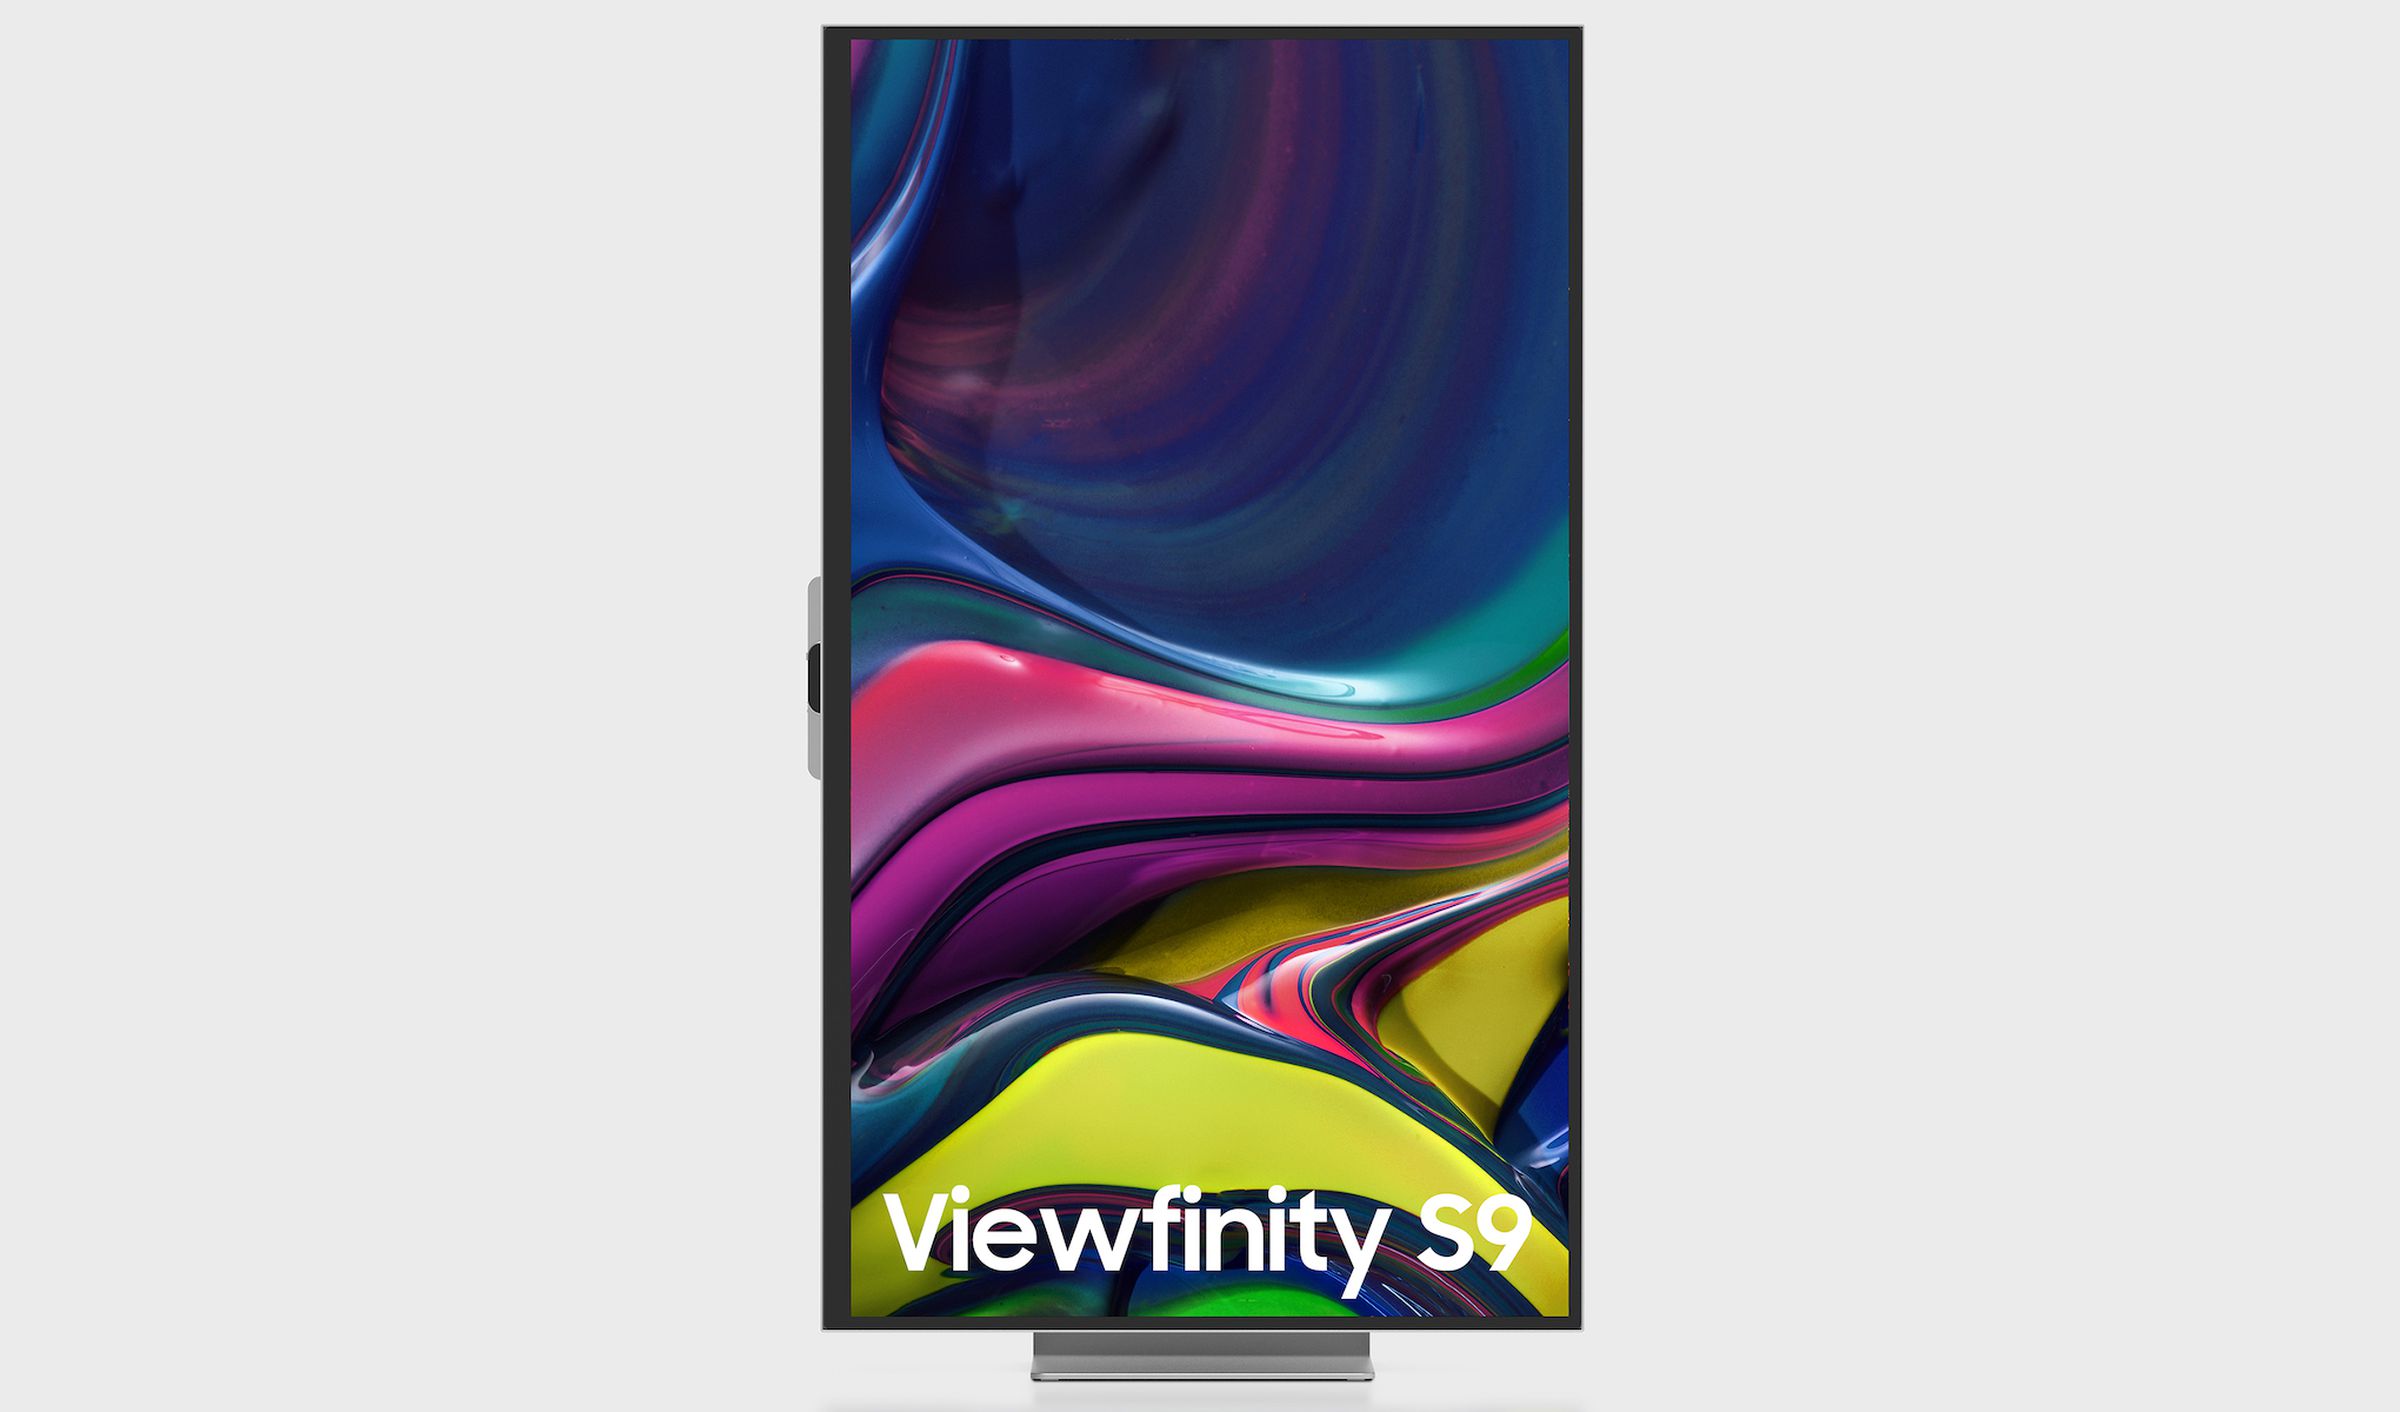 Samsung ViewFinity S9 screen image in portrait orientation.